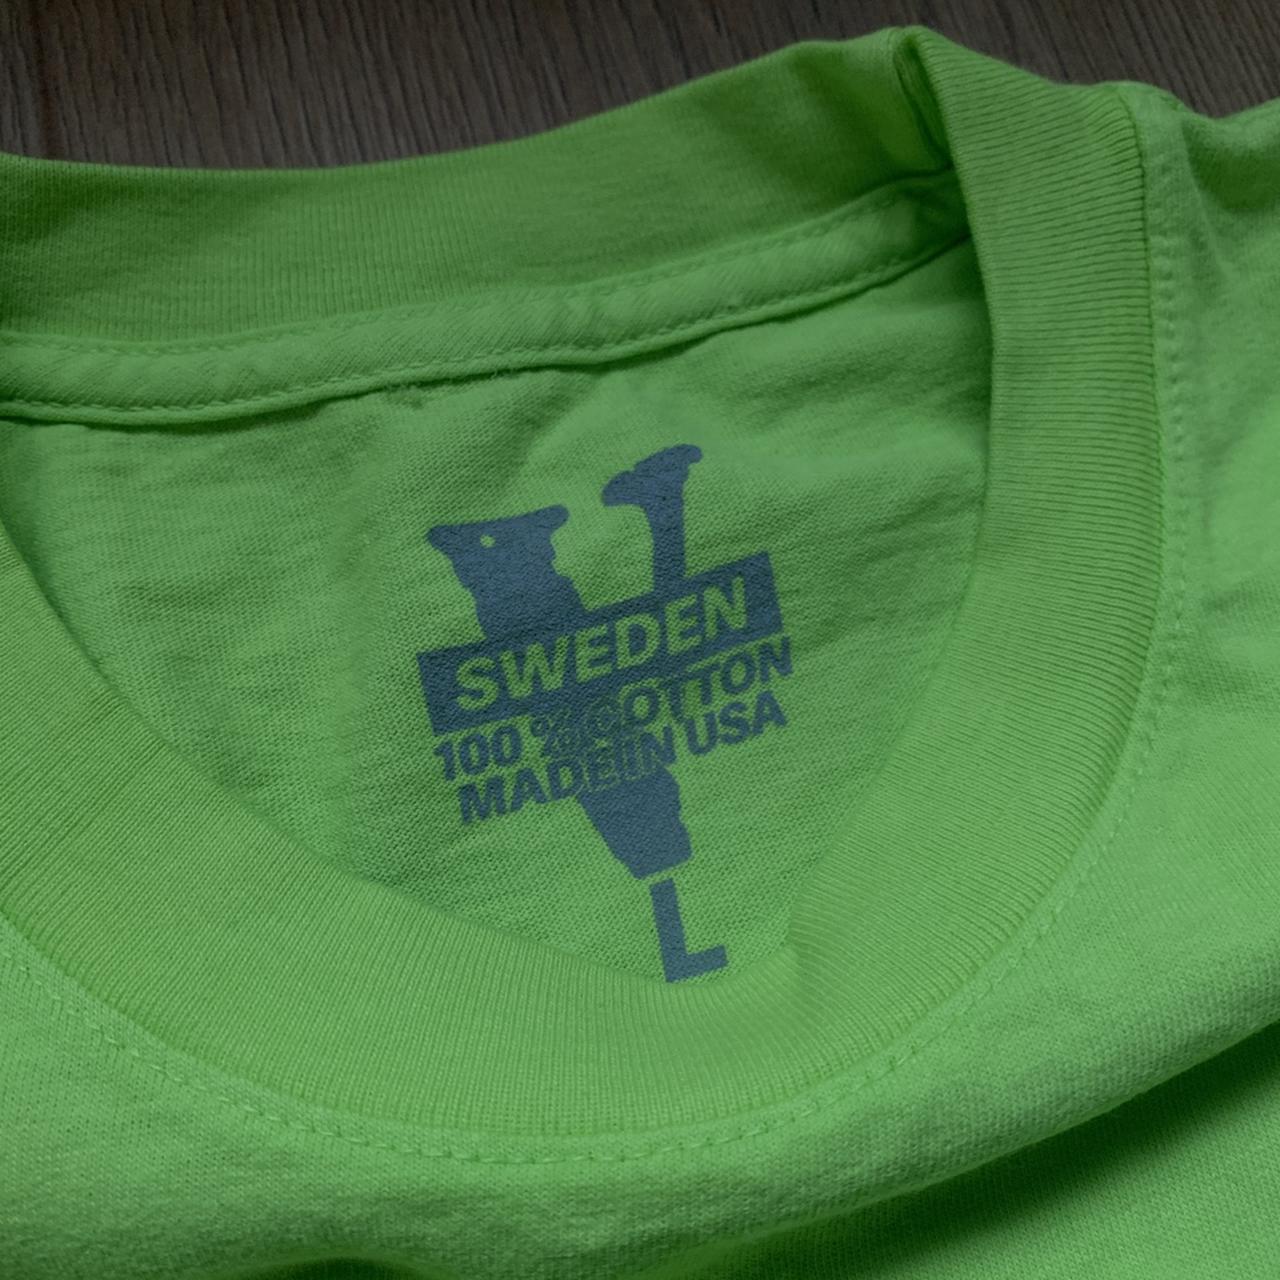 Vlone A$ap Rocky Sweden Tour Stockholm Made in USA Promenad Green Sweatsuit  Sz L